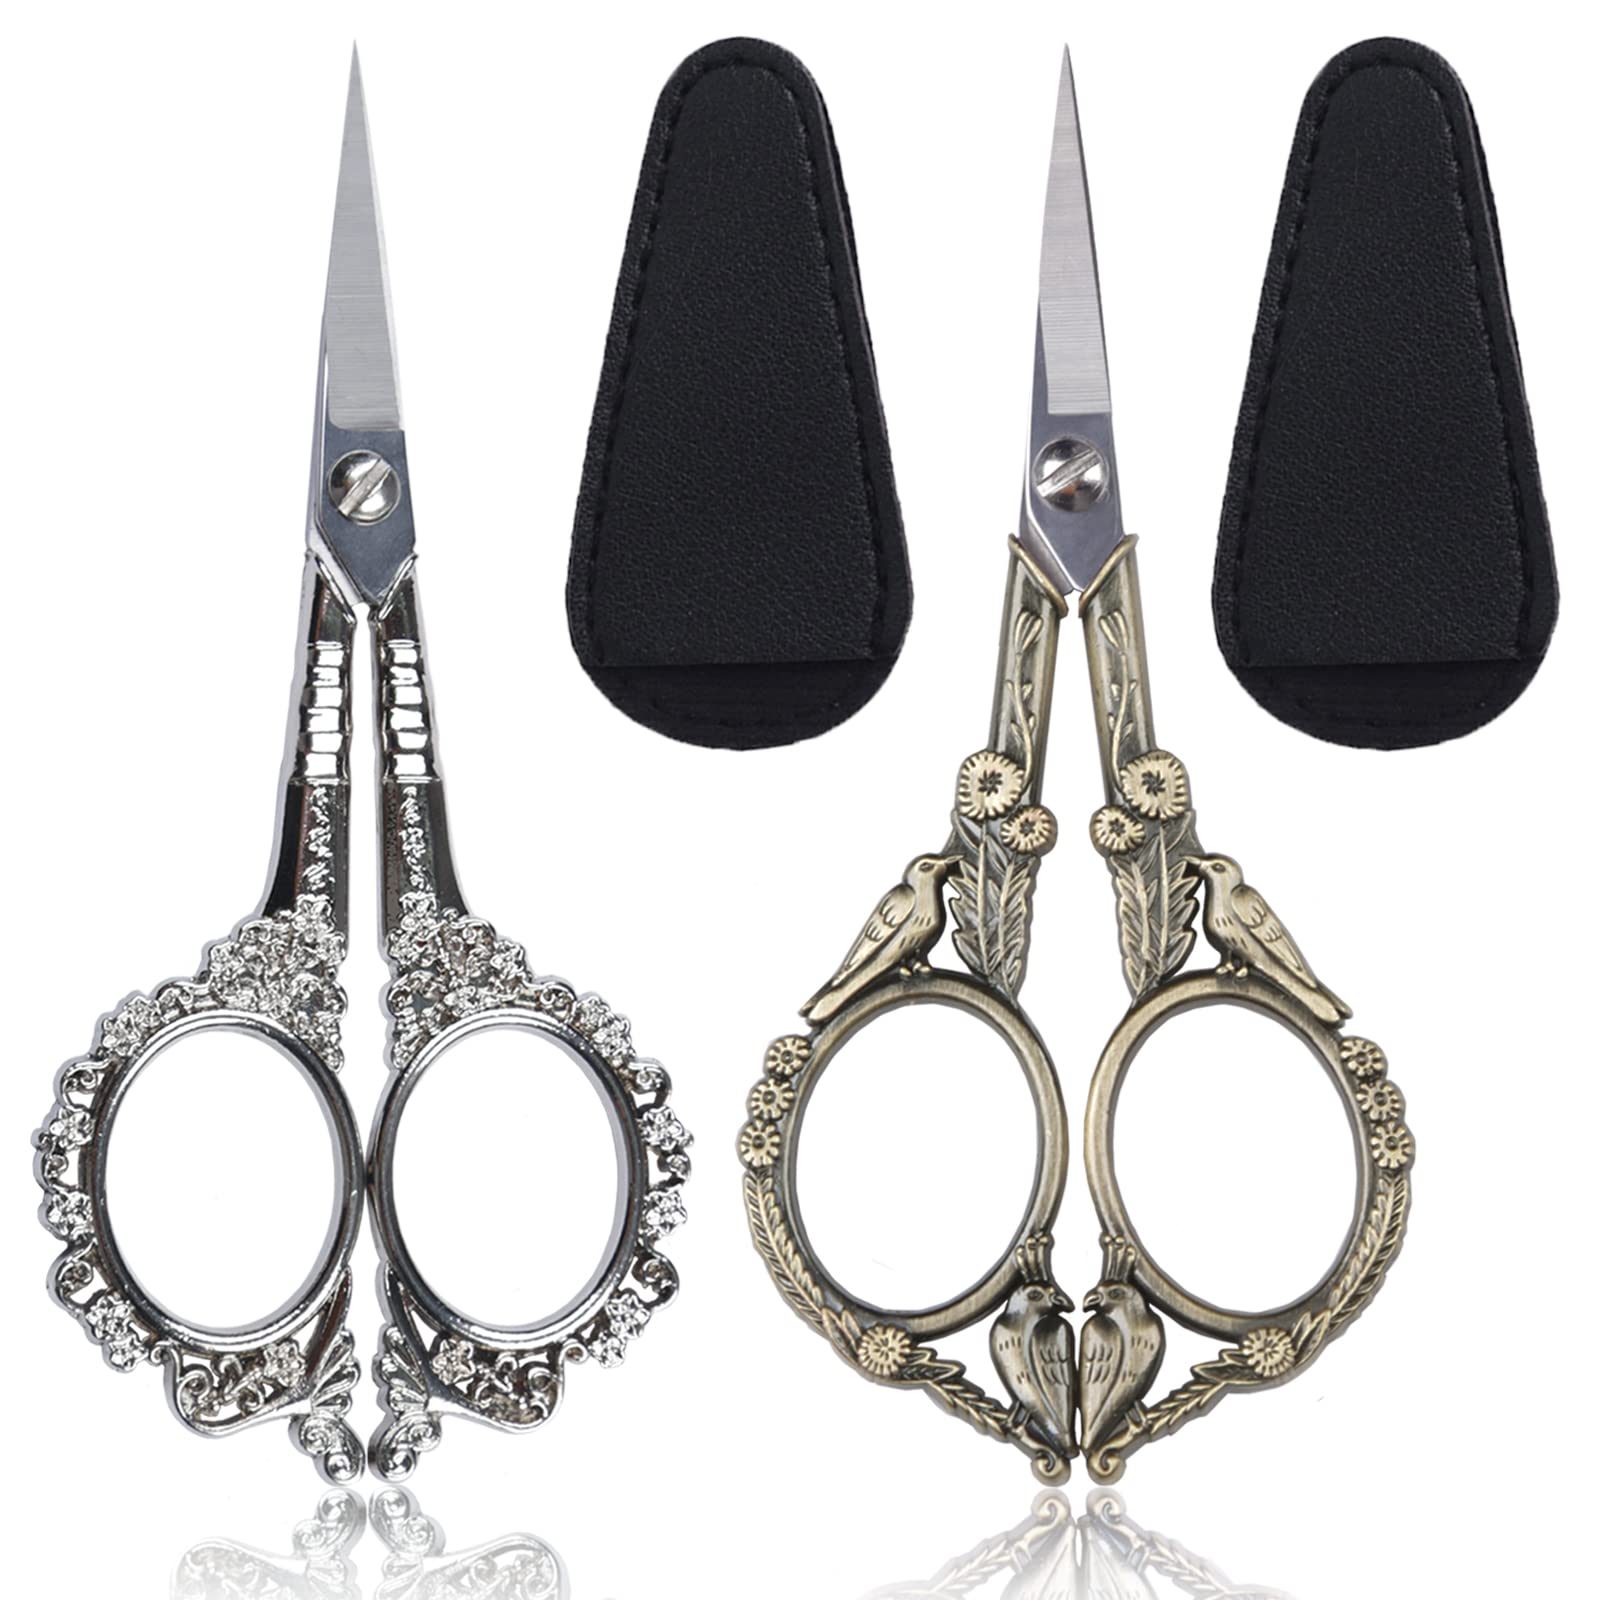 Multi-Purpose Small Scissors For Men Women Nails, Hair, Beard, Cuticles,  Thread